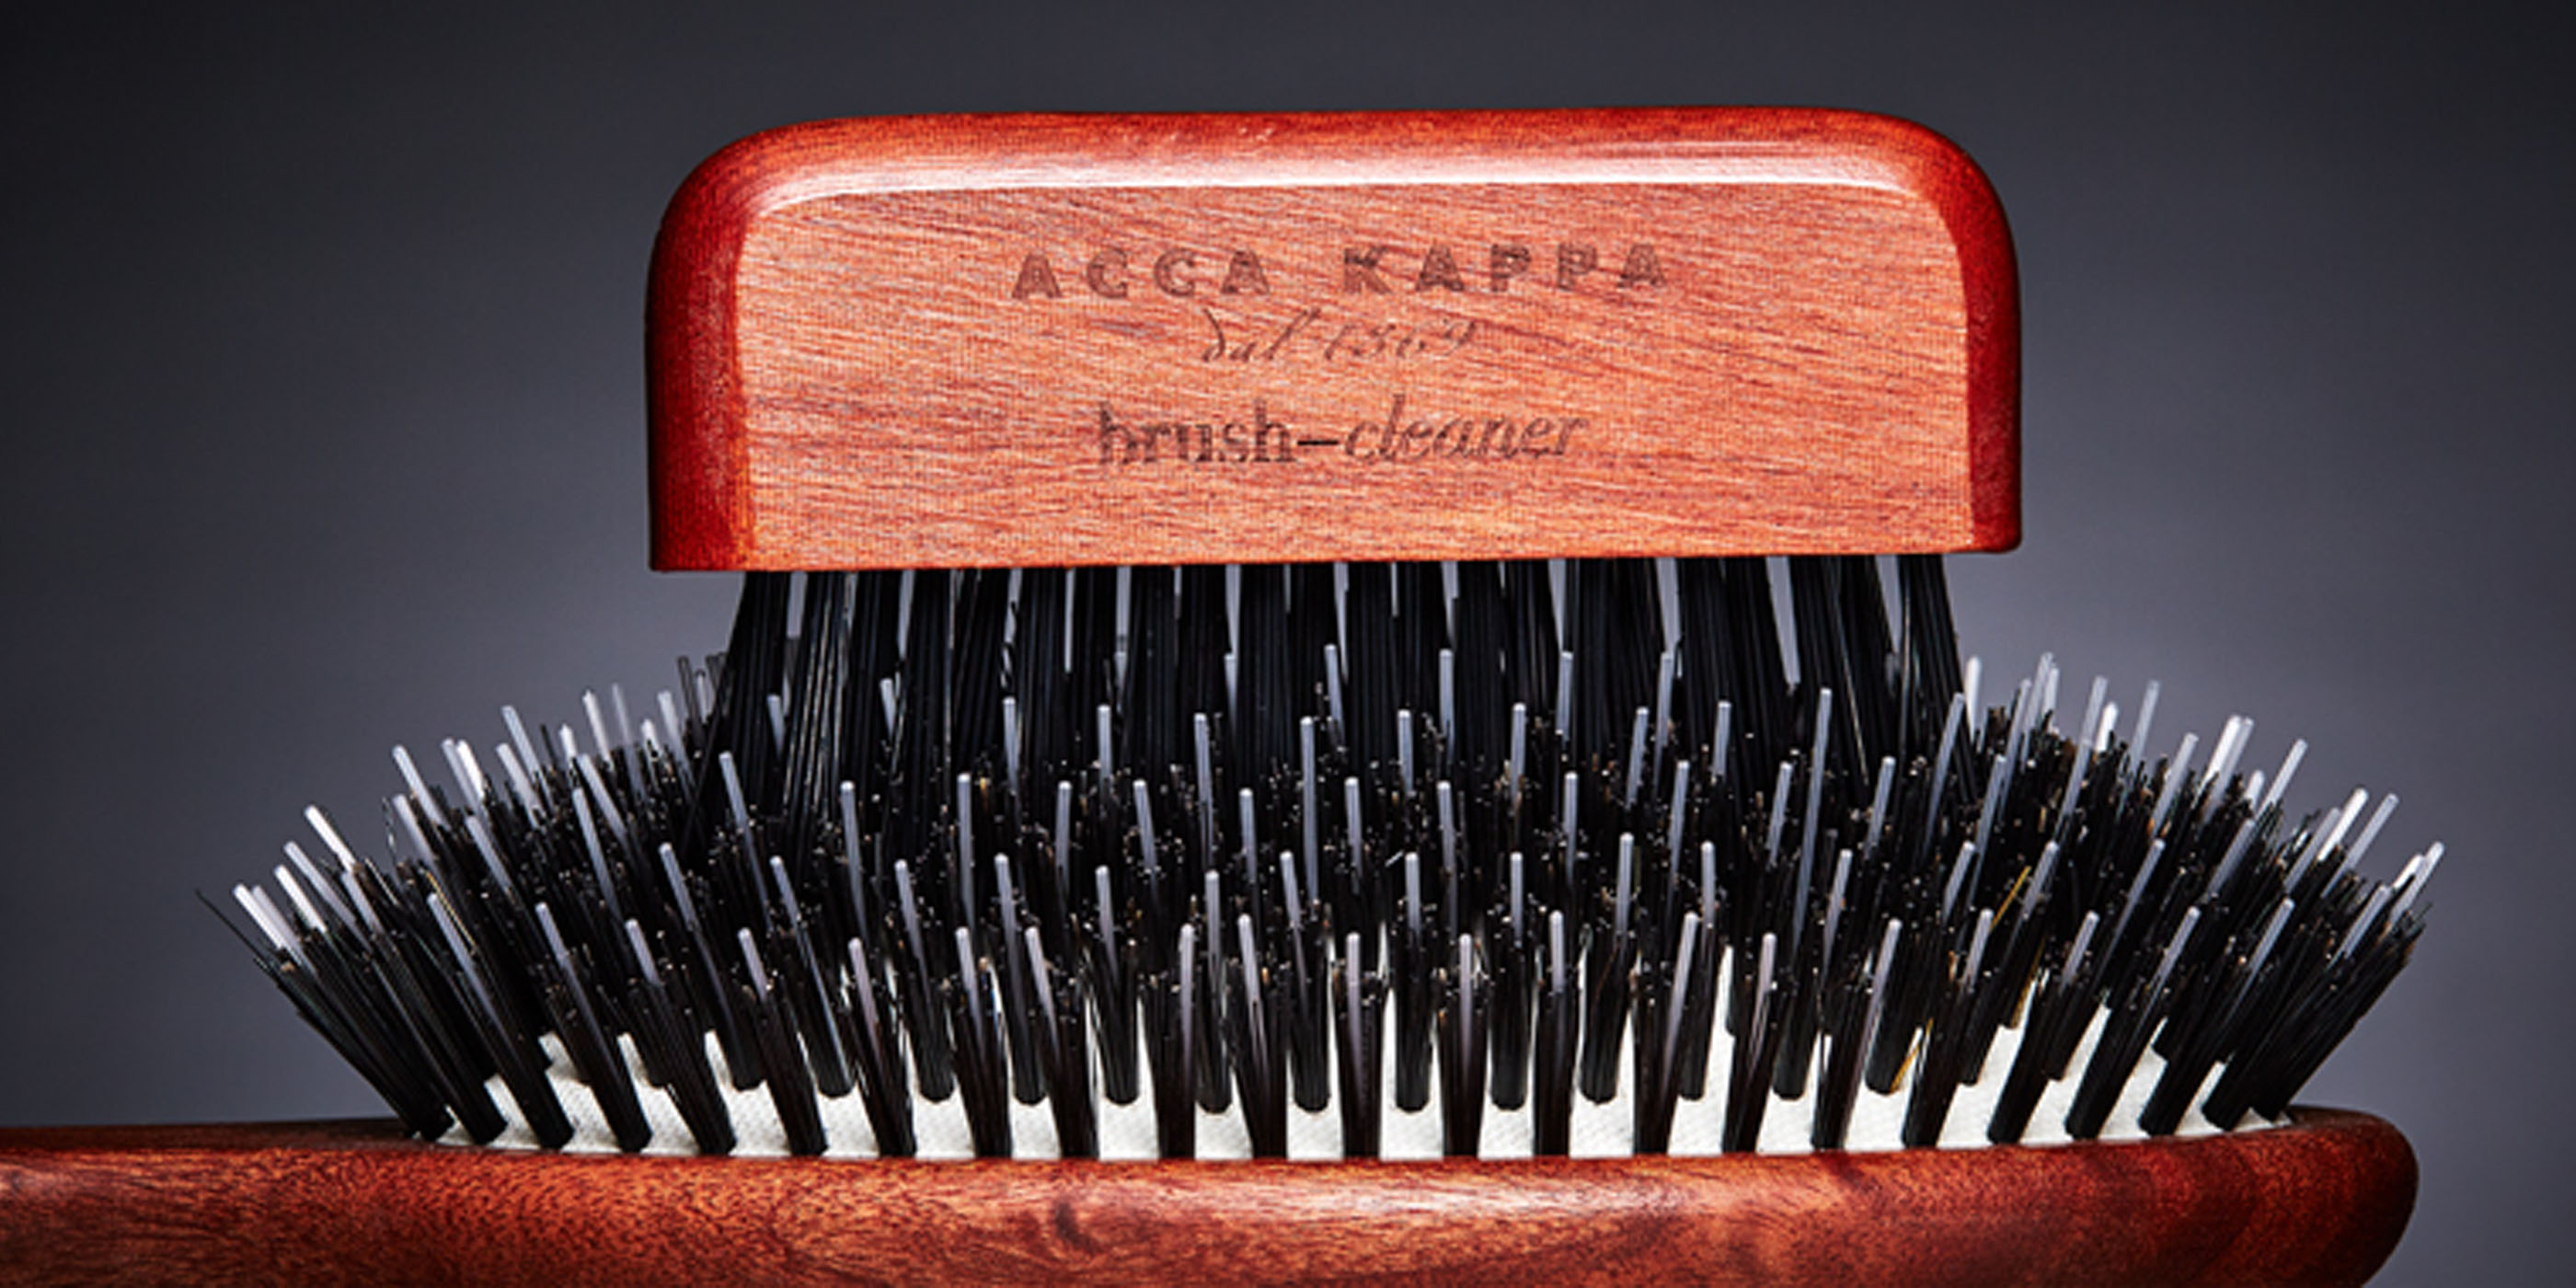 ACCA KAPPA Brush Cleaner verzorging borstel